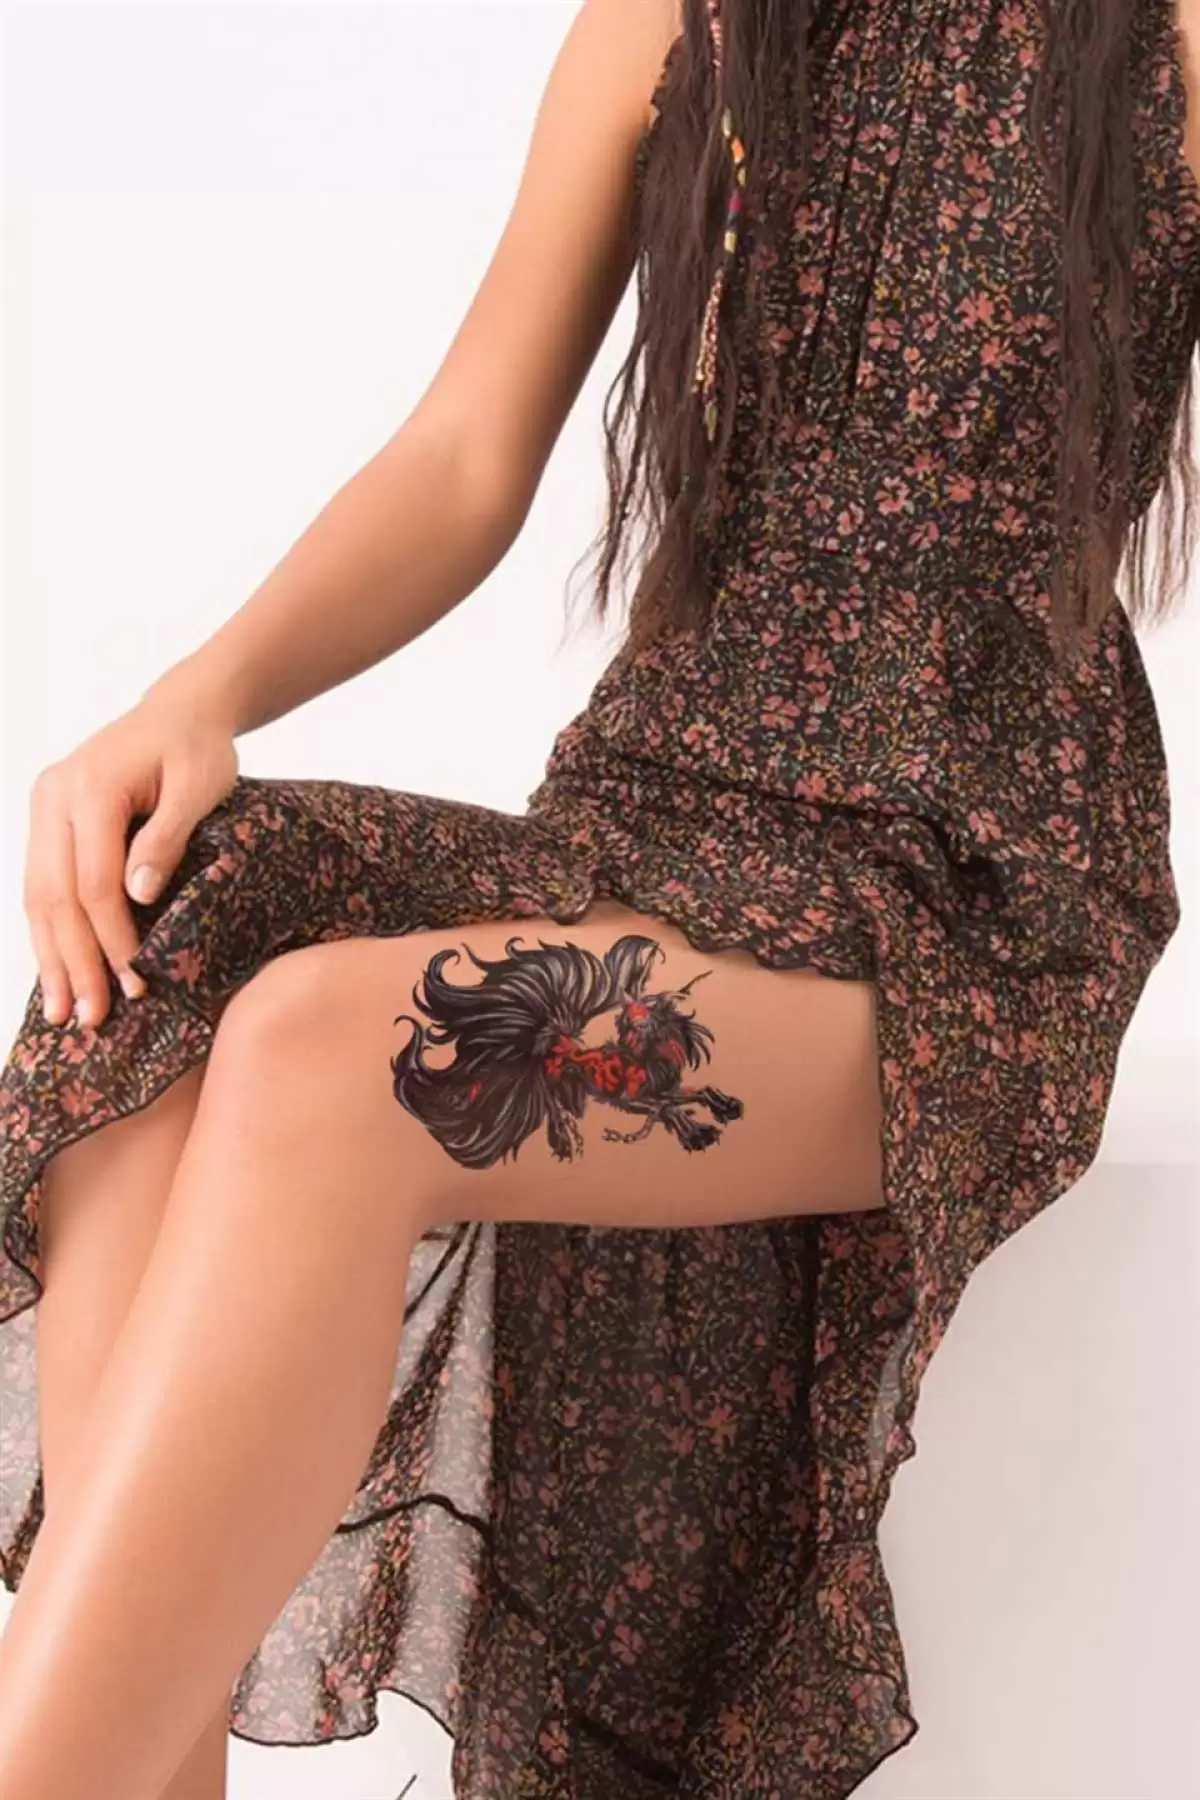 Geçici Kurt Dövme Tattoo